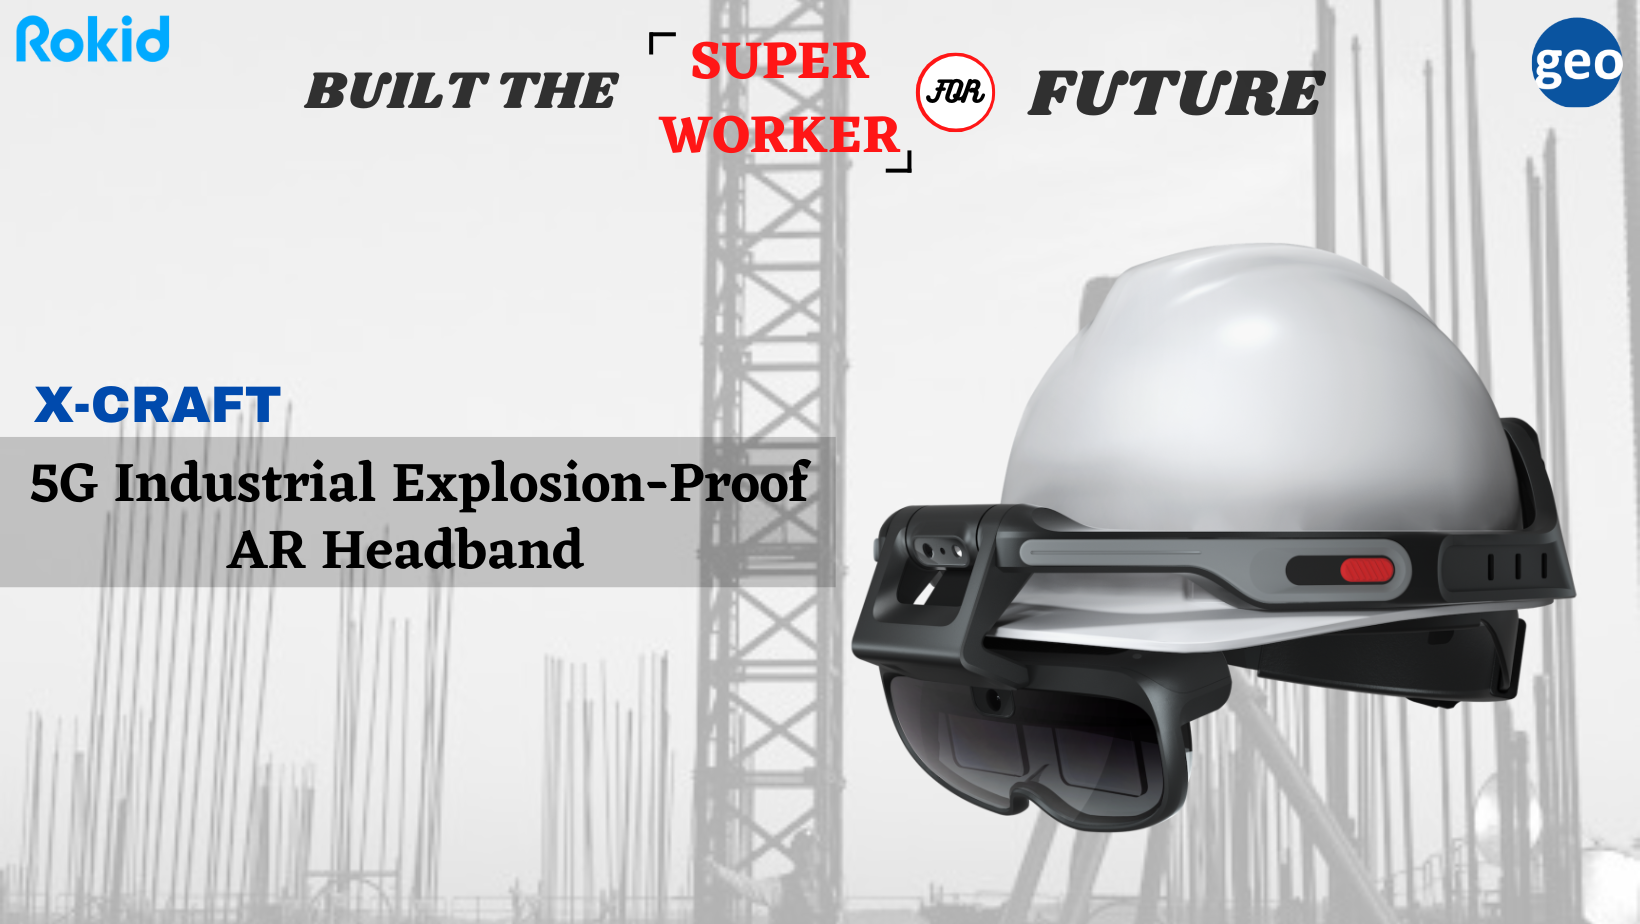 Rokid: X-CRAFT 5G Industrial Explosion-Proof AR Headband